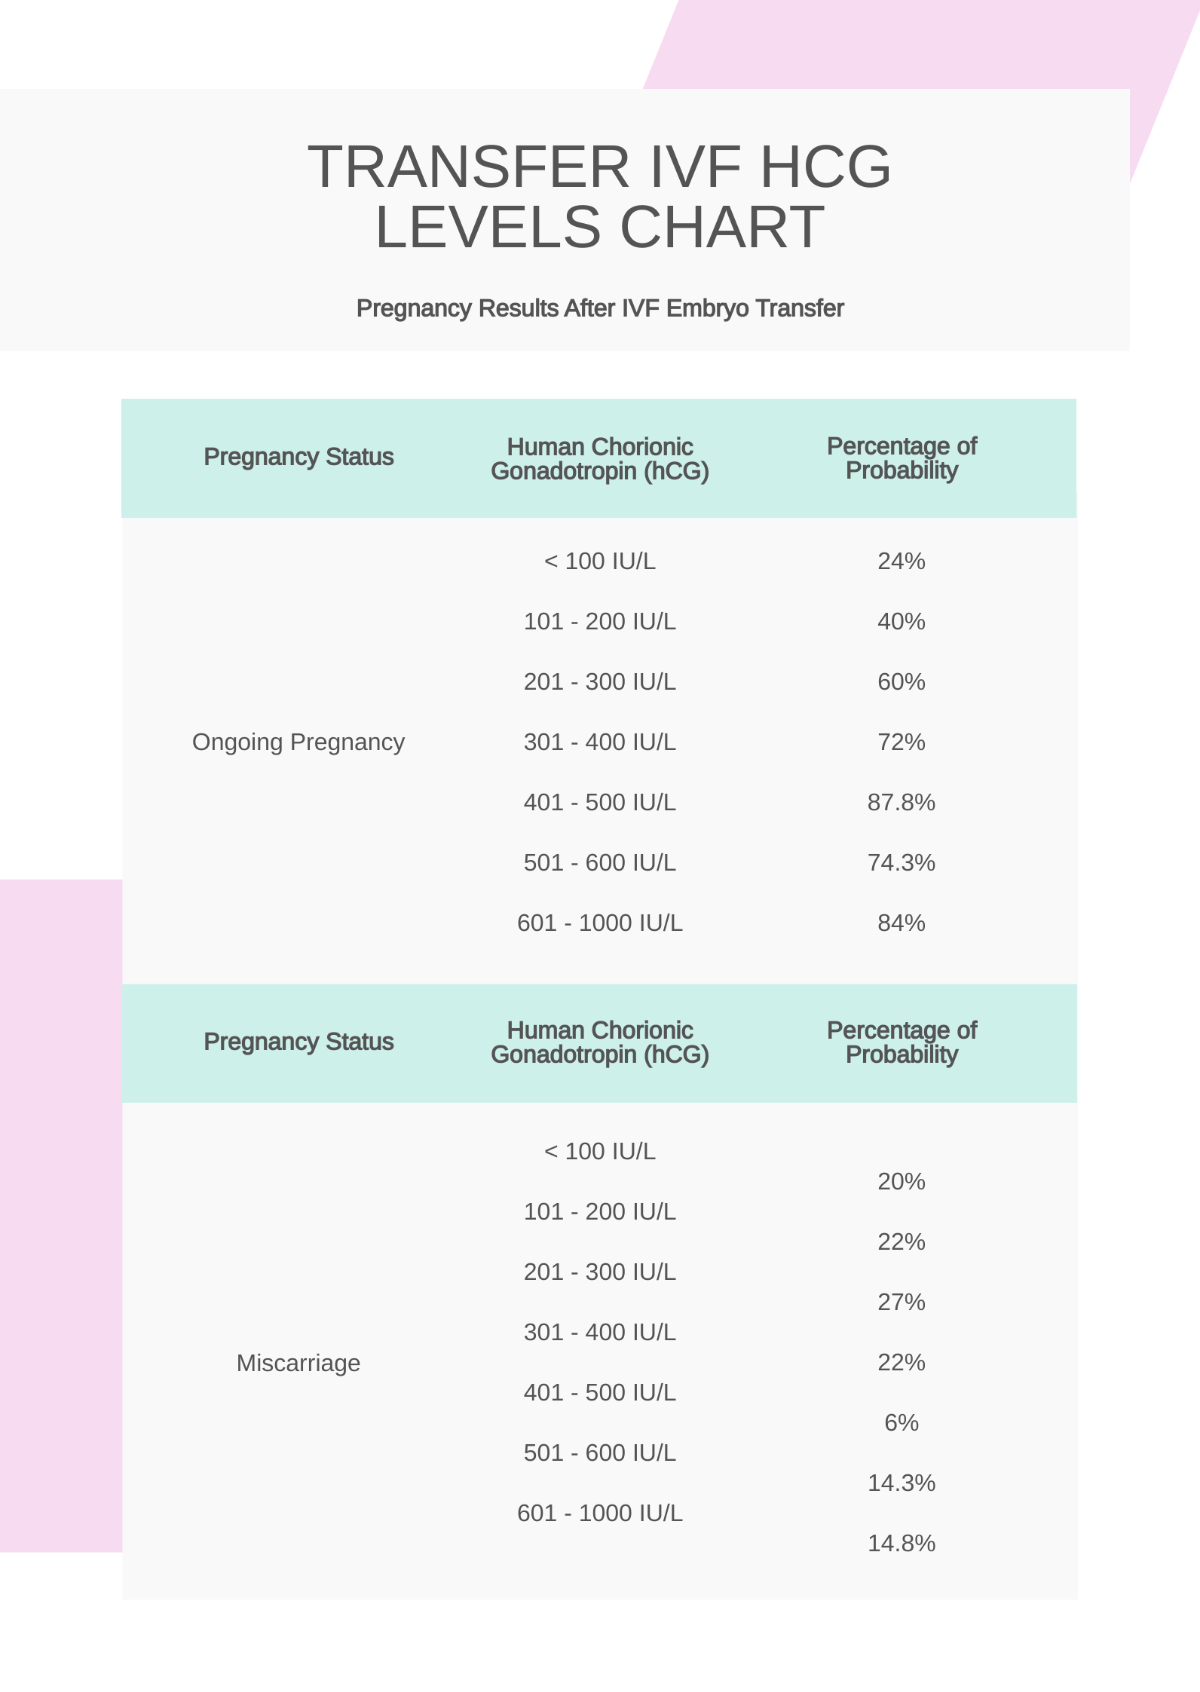 Transfer IVF HCG Levels Chart Template